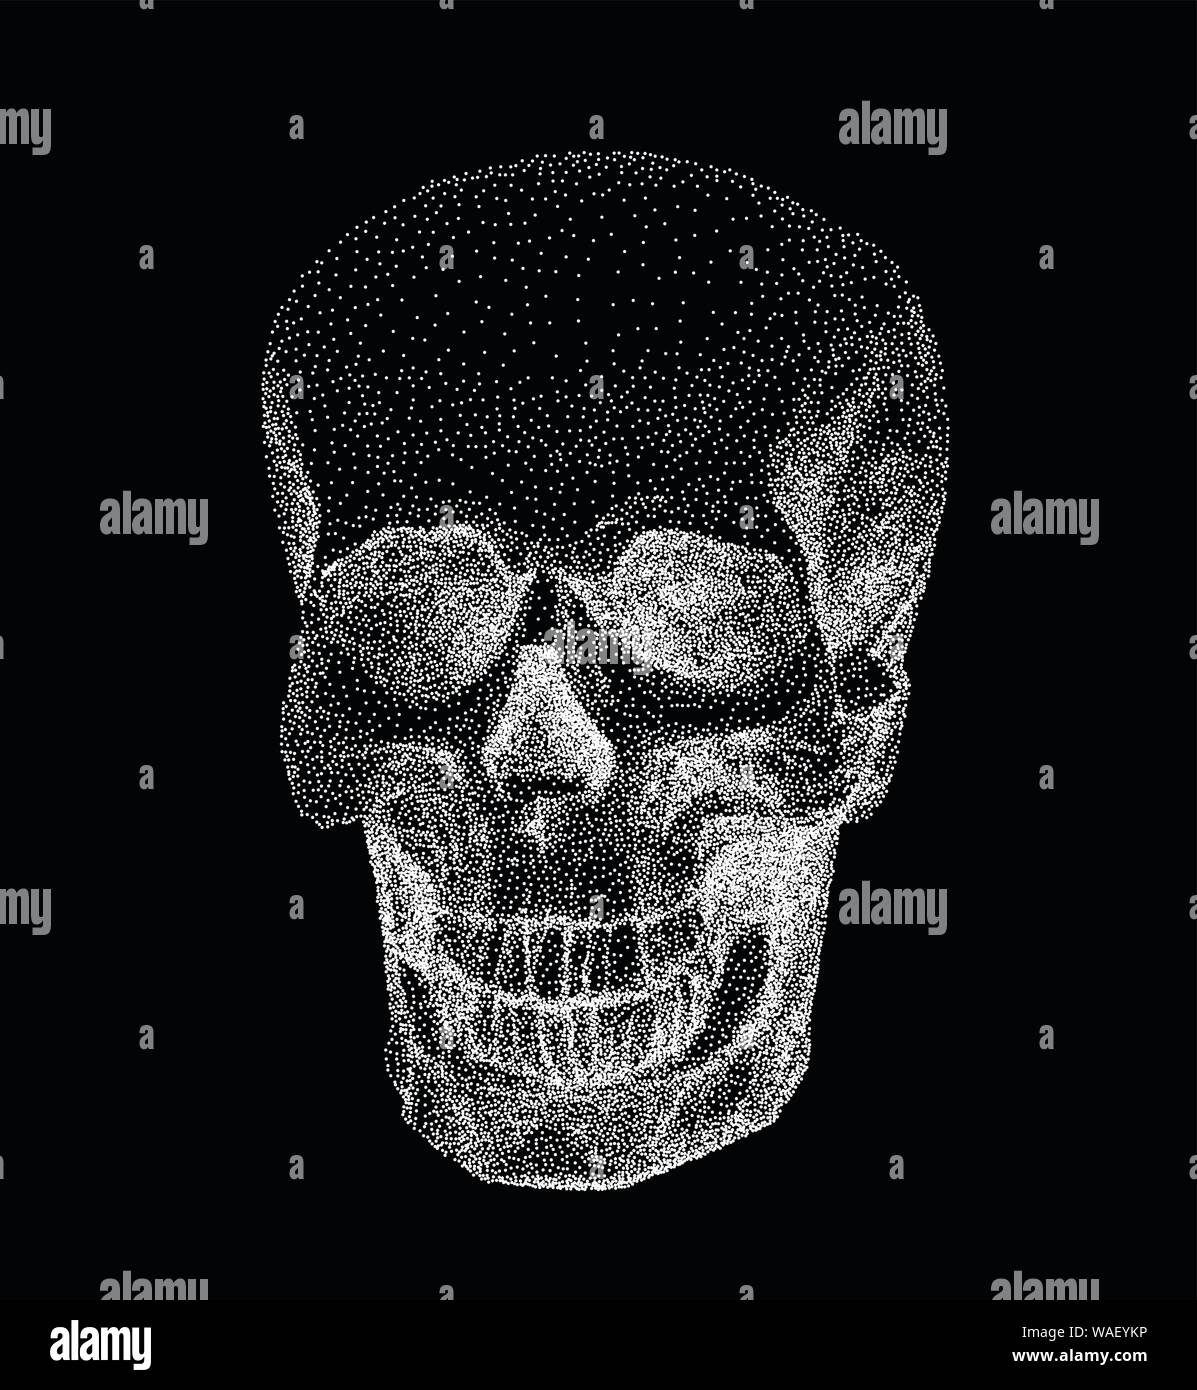 Human Skull Full Face From Digital White Dots On Black Background